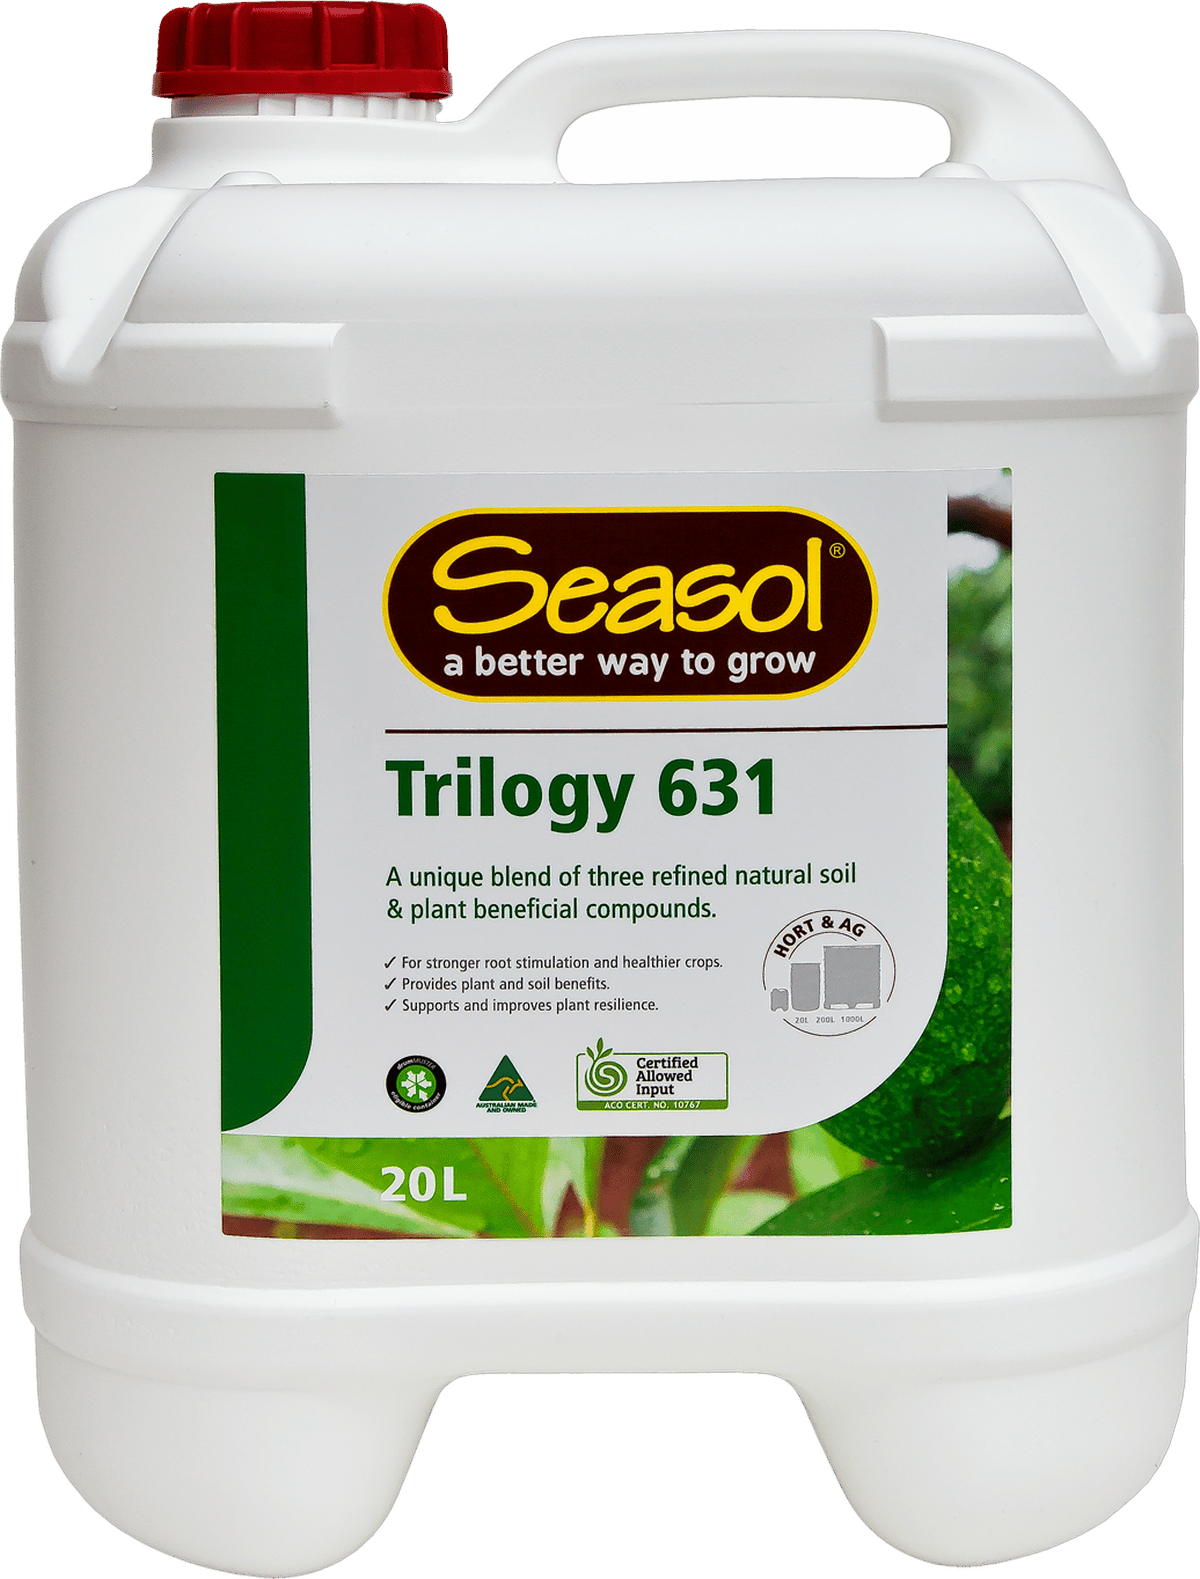 Seasol Trilogy 631 | Seasol Commercial Product in New Zealand